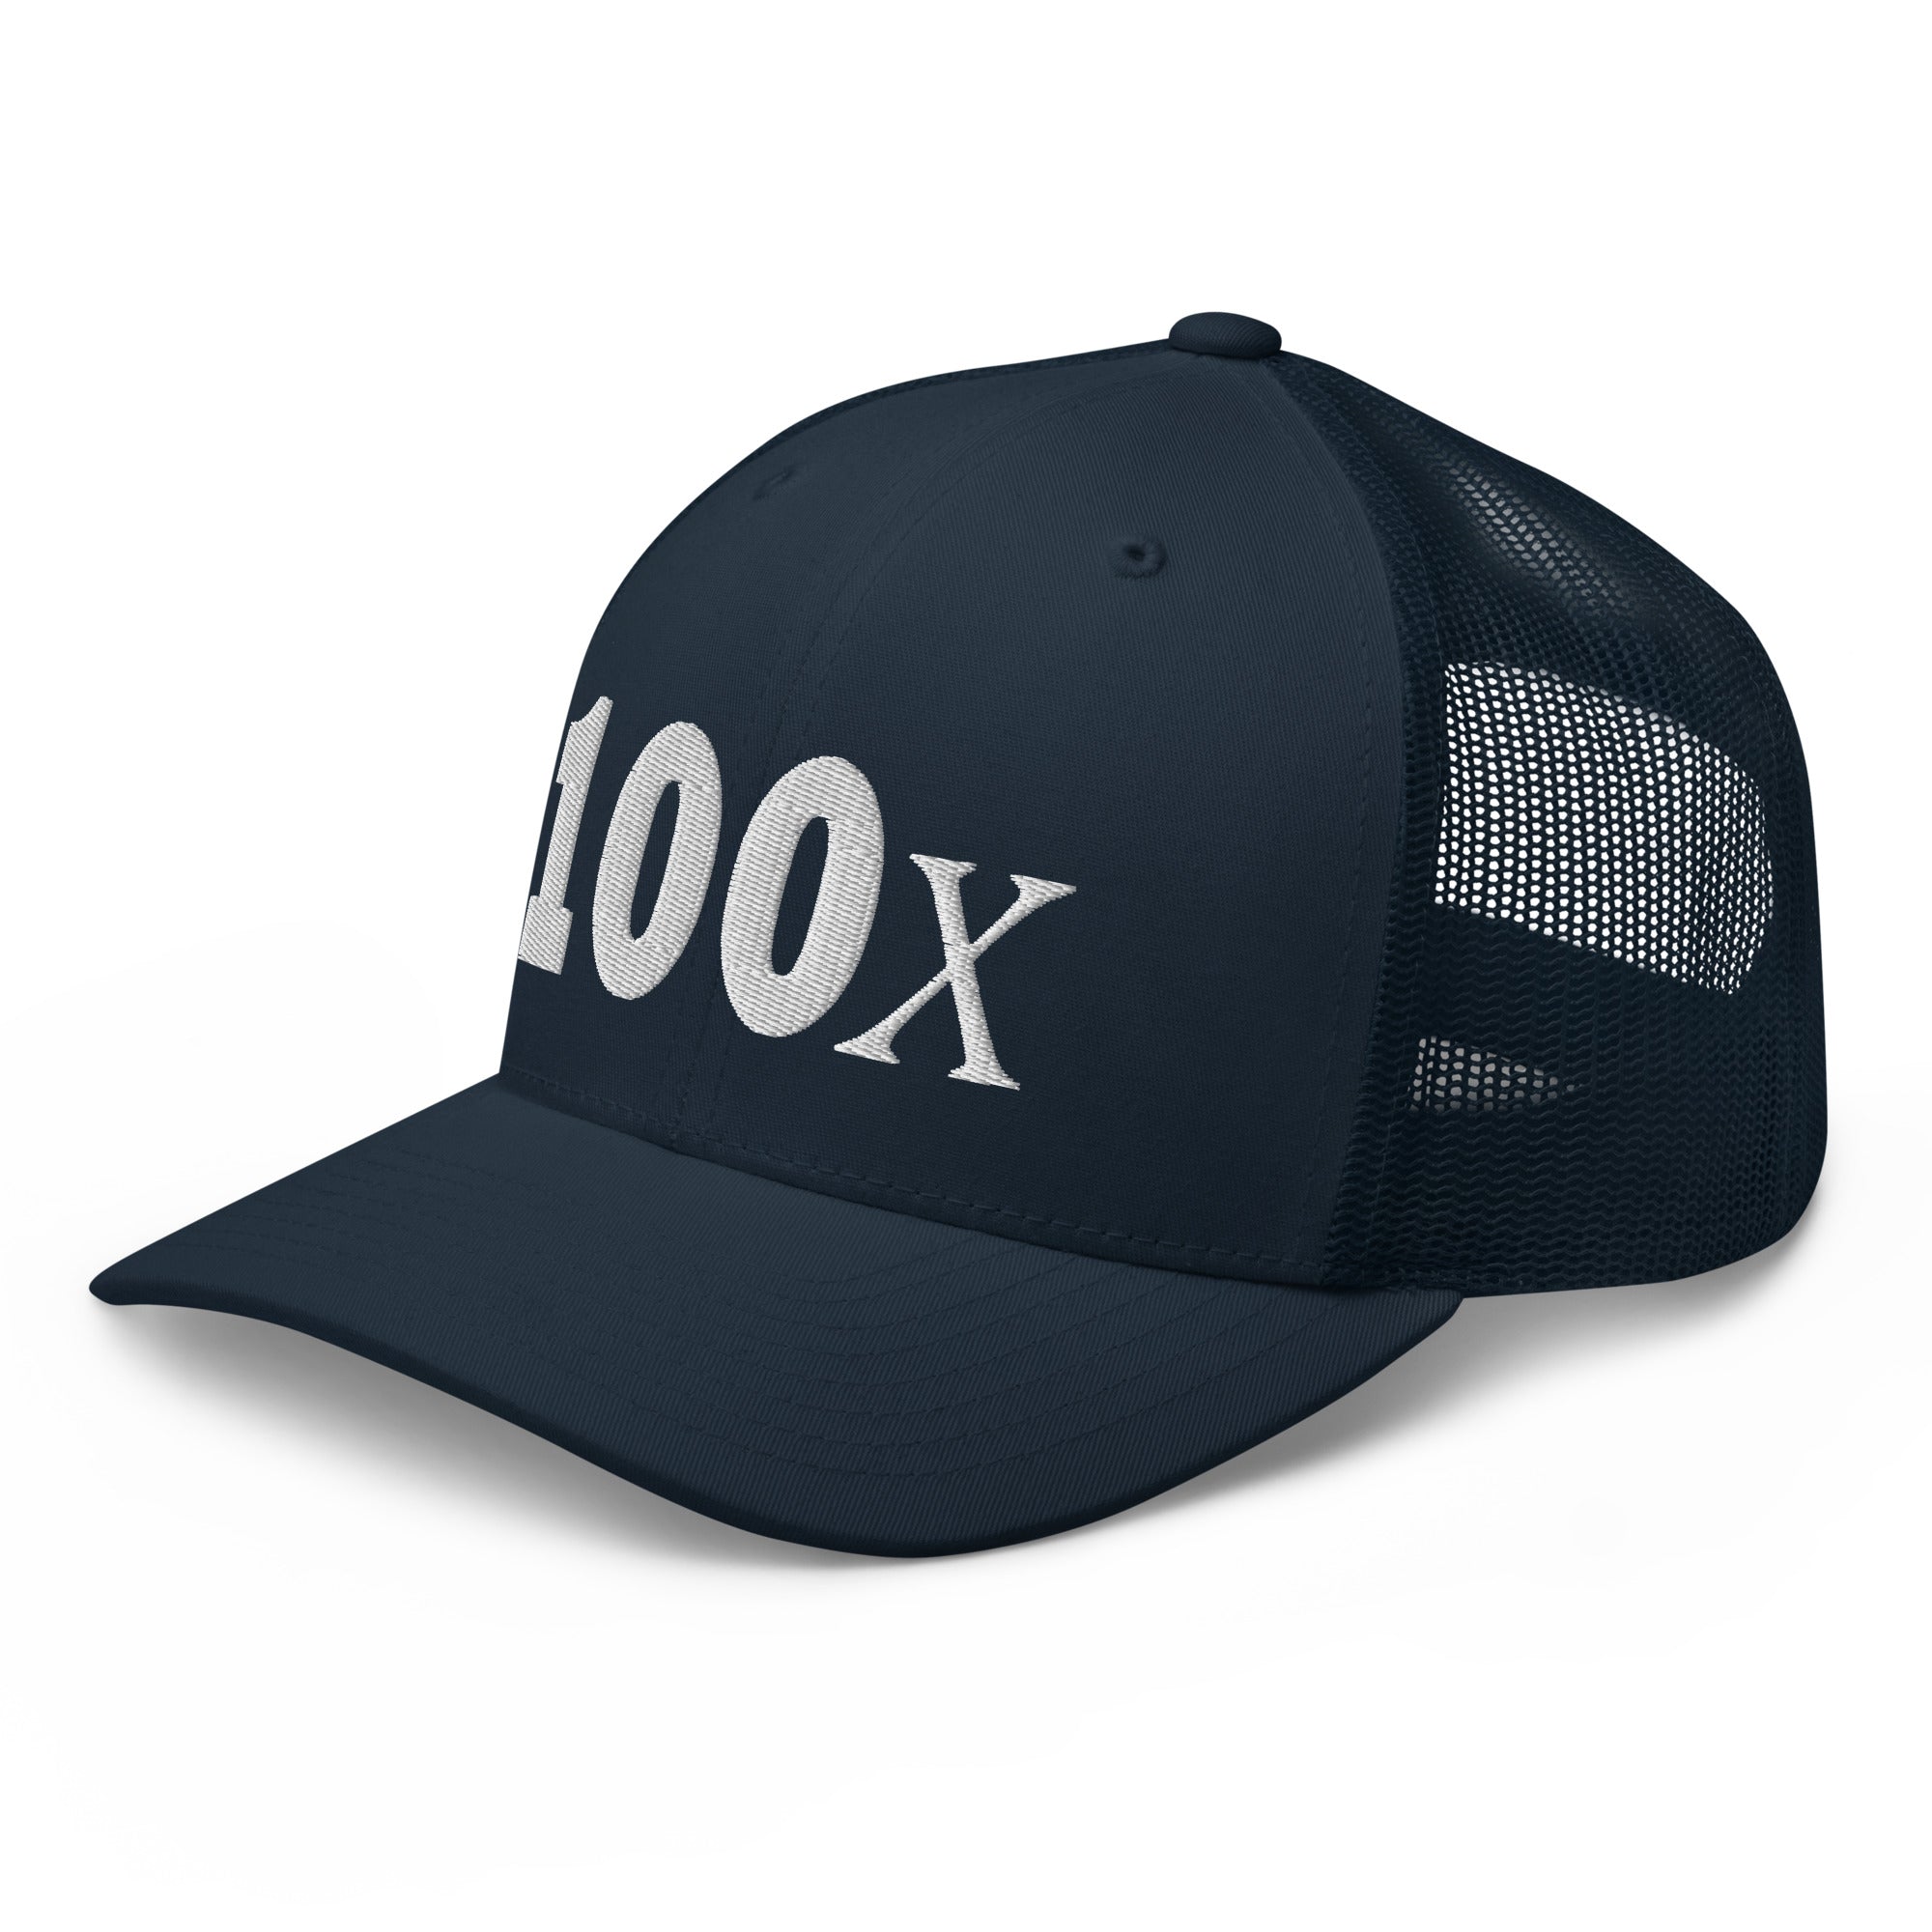 100x Hidden Gem Crypto Coin Bull Run Trucker Cap Snapback Hat